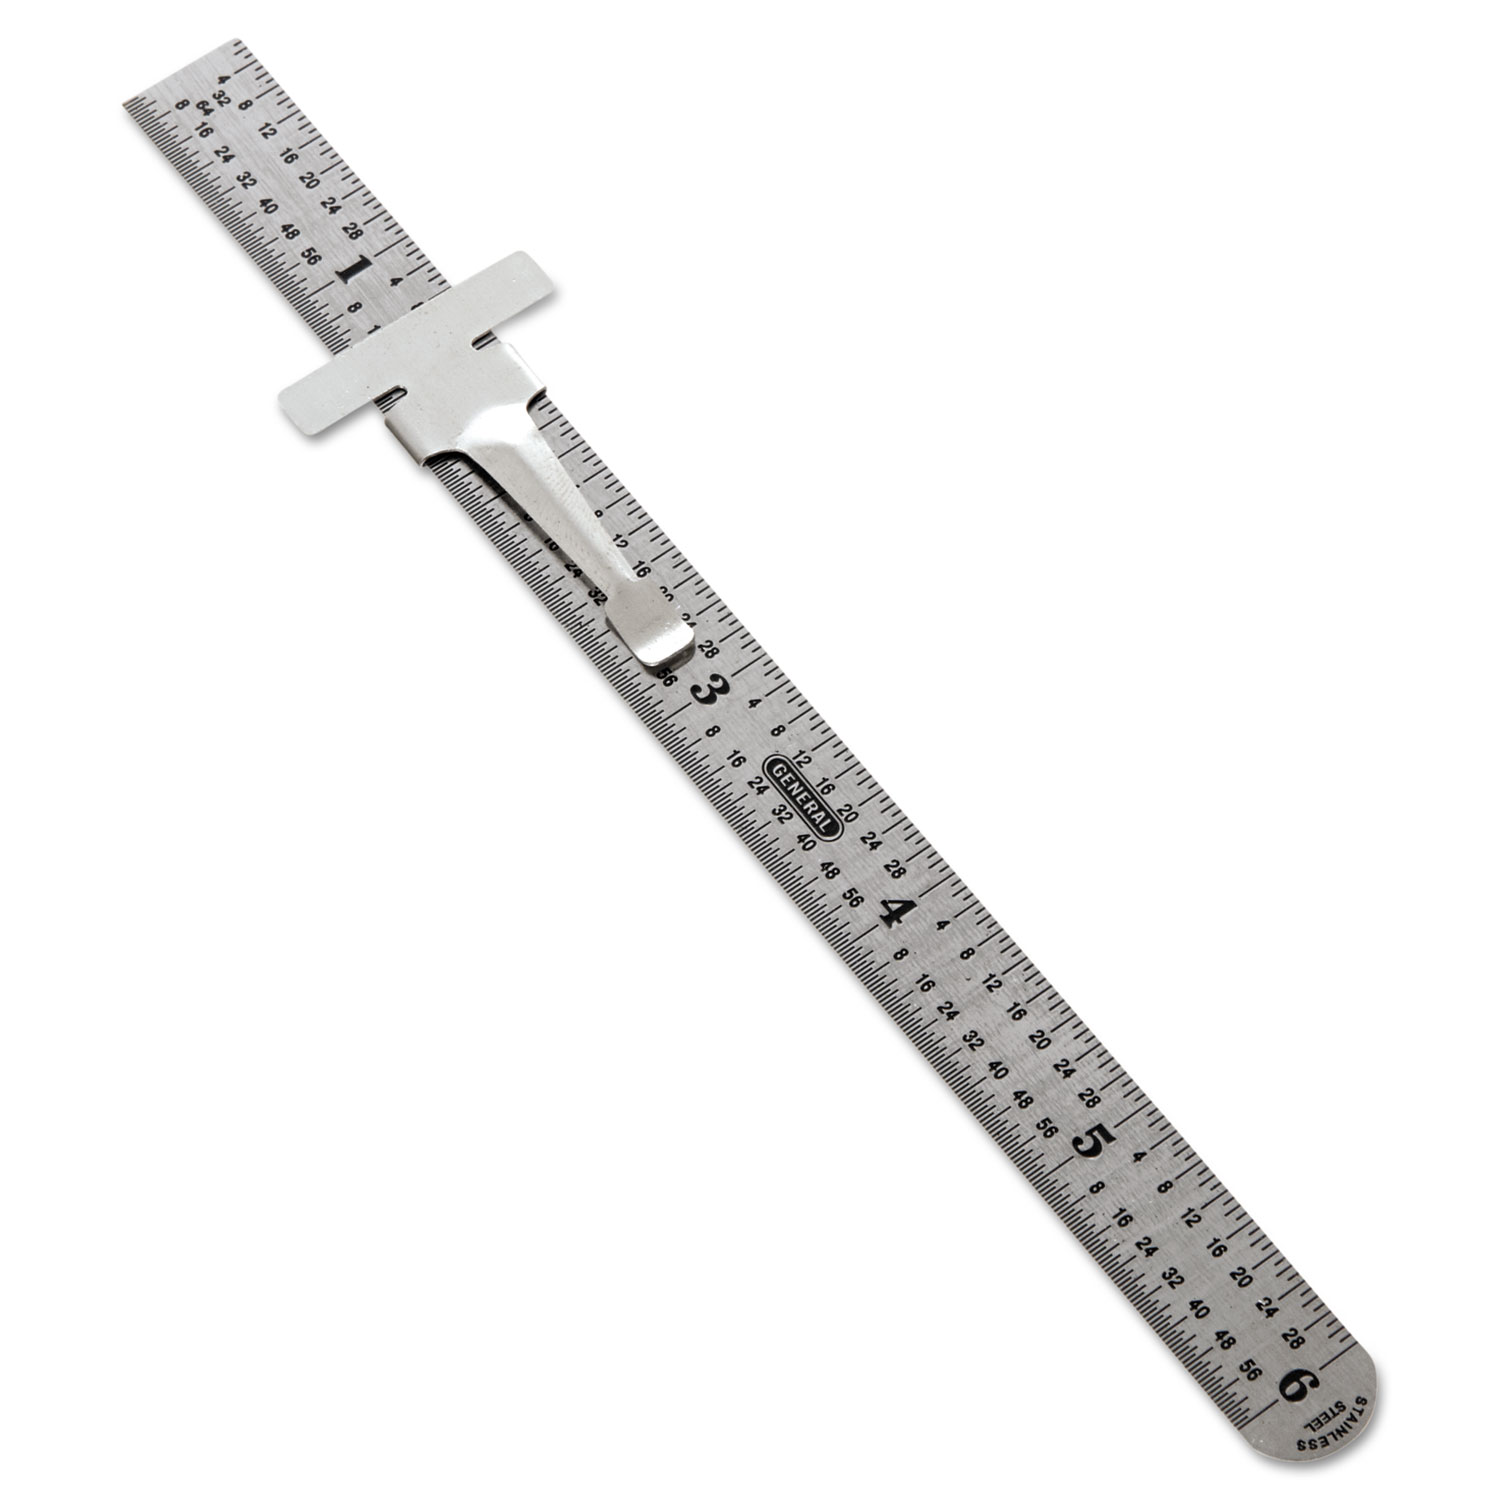 General® Precision Stainless Steel Ruler Standardmetric 6 In